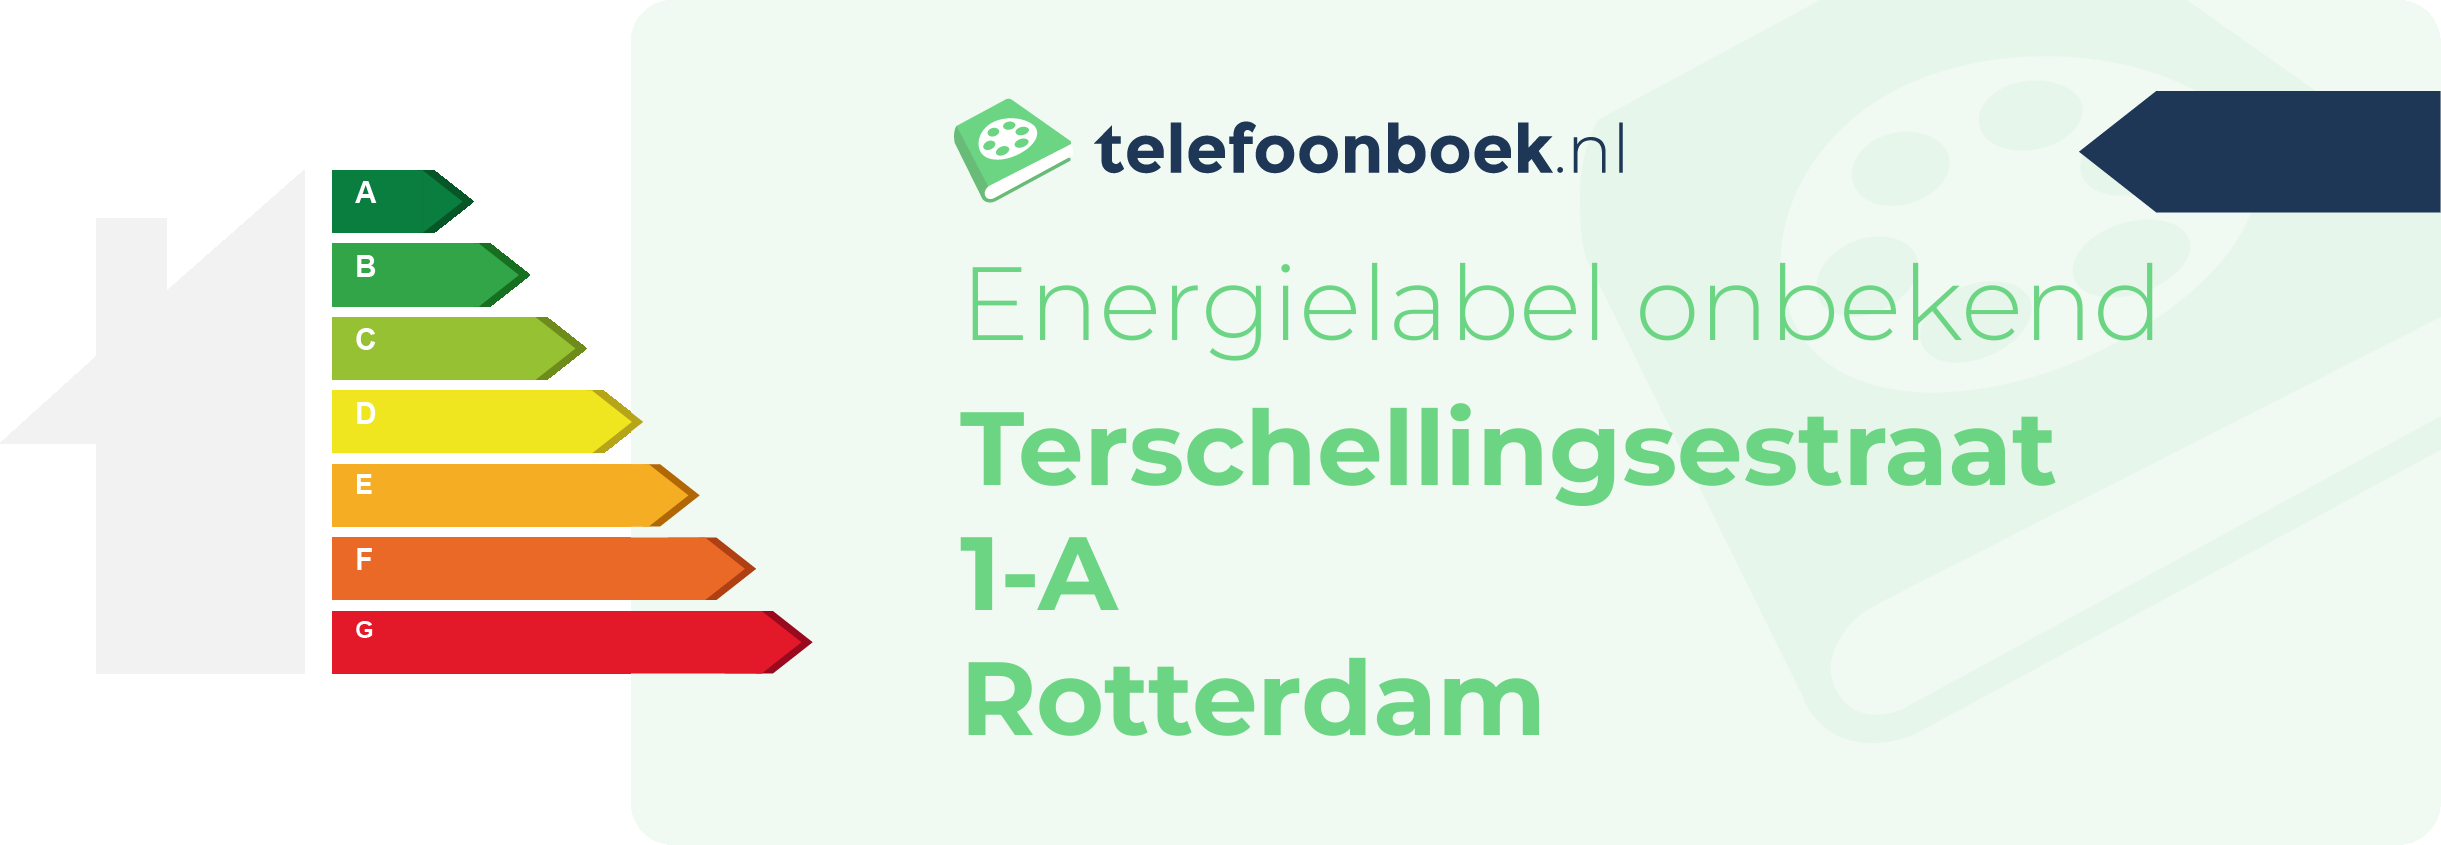 Energielabel Terschellingsestraat 1-A Rotterdam